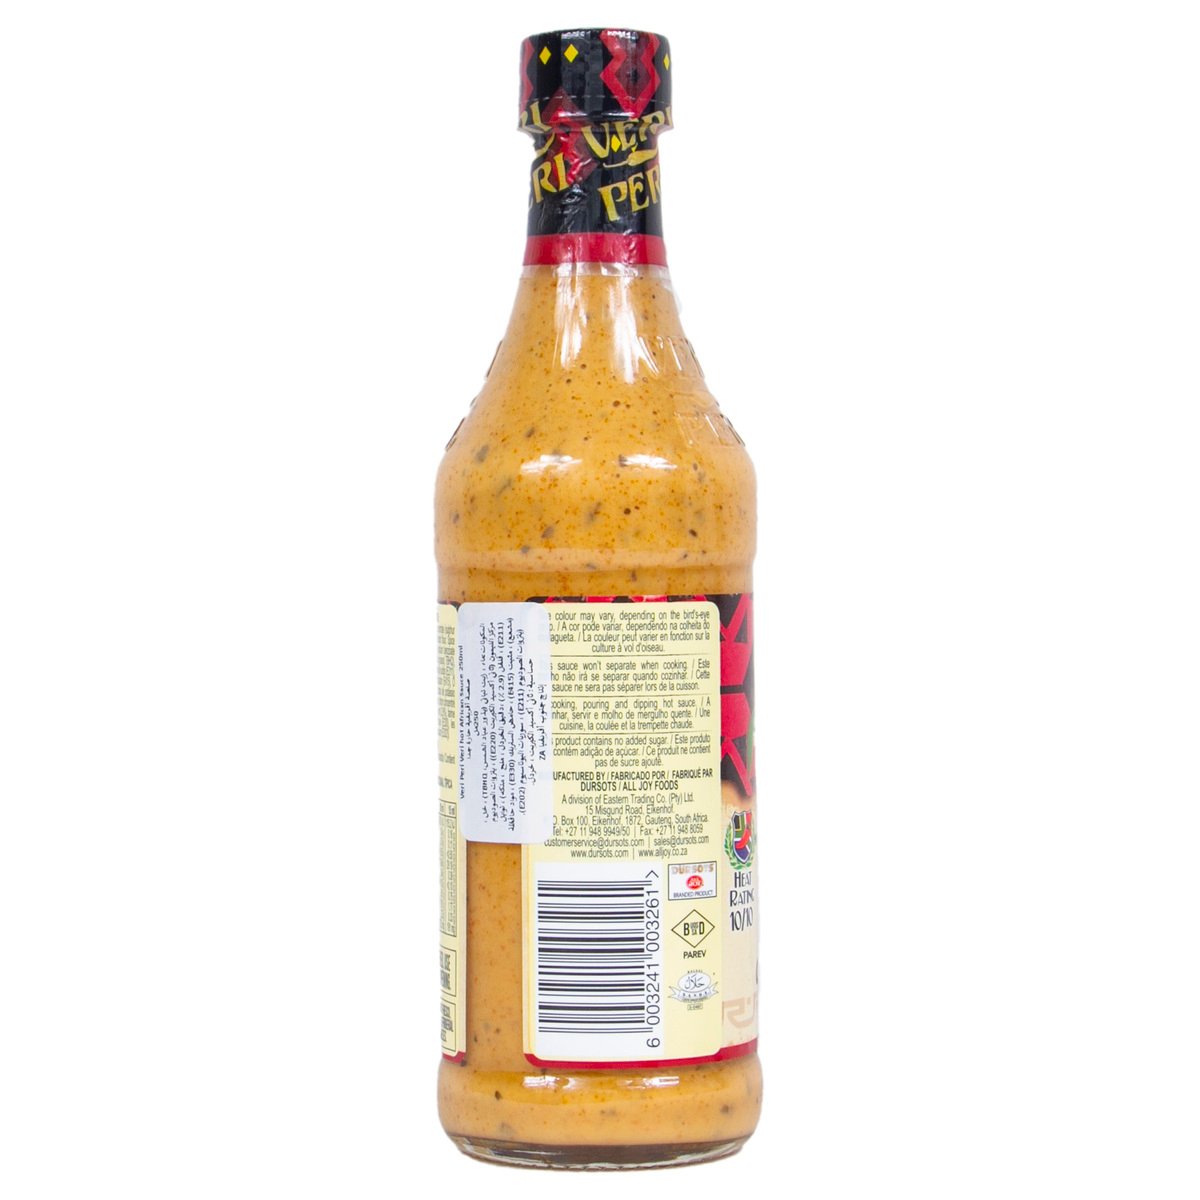 Veri Peri Very Hot African Sauce 250 ml